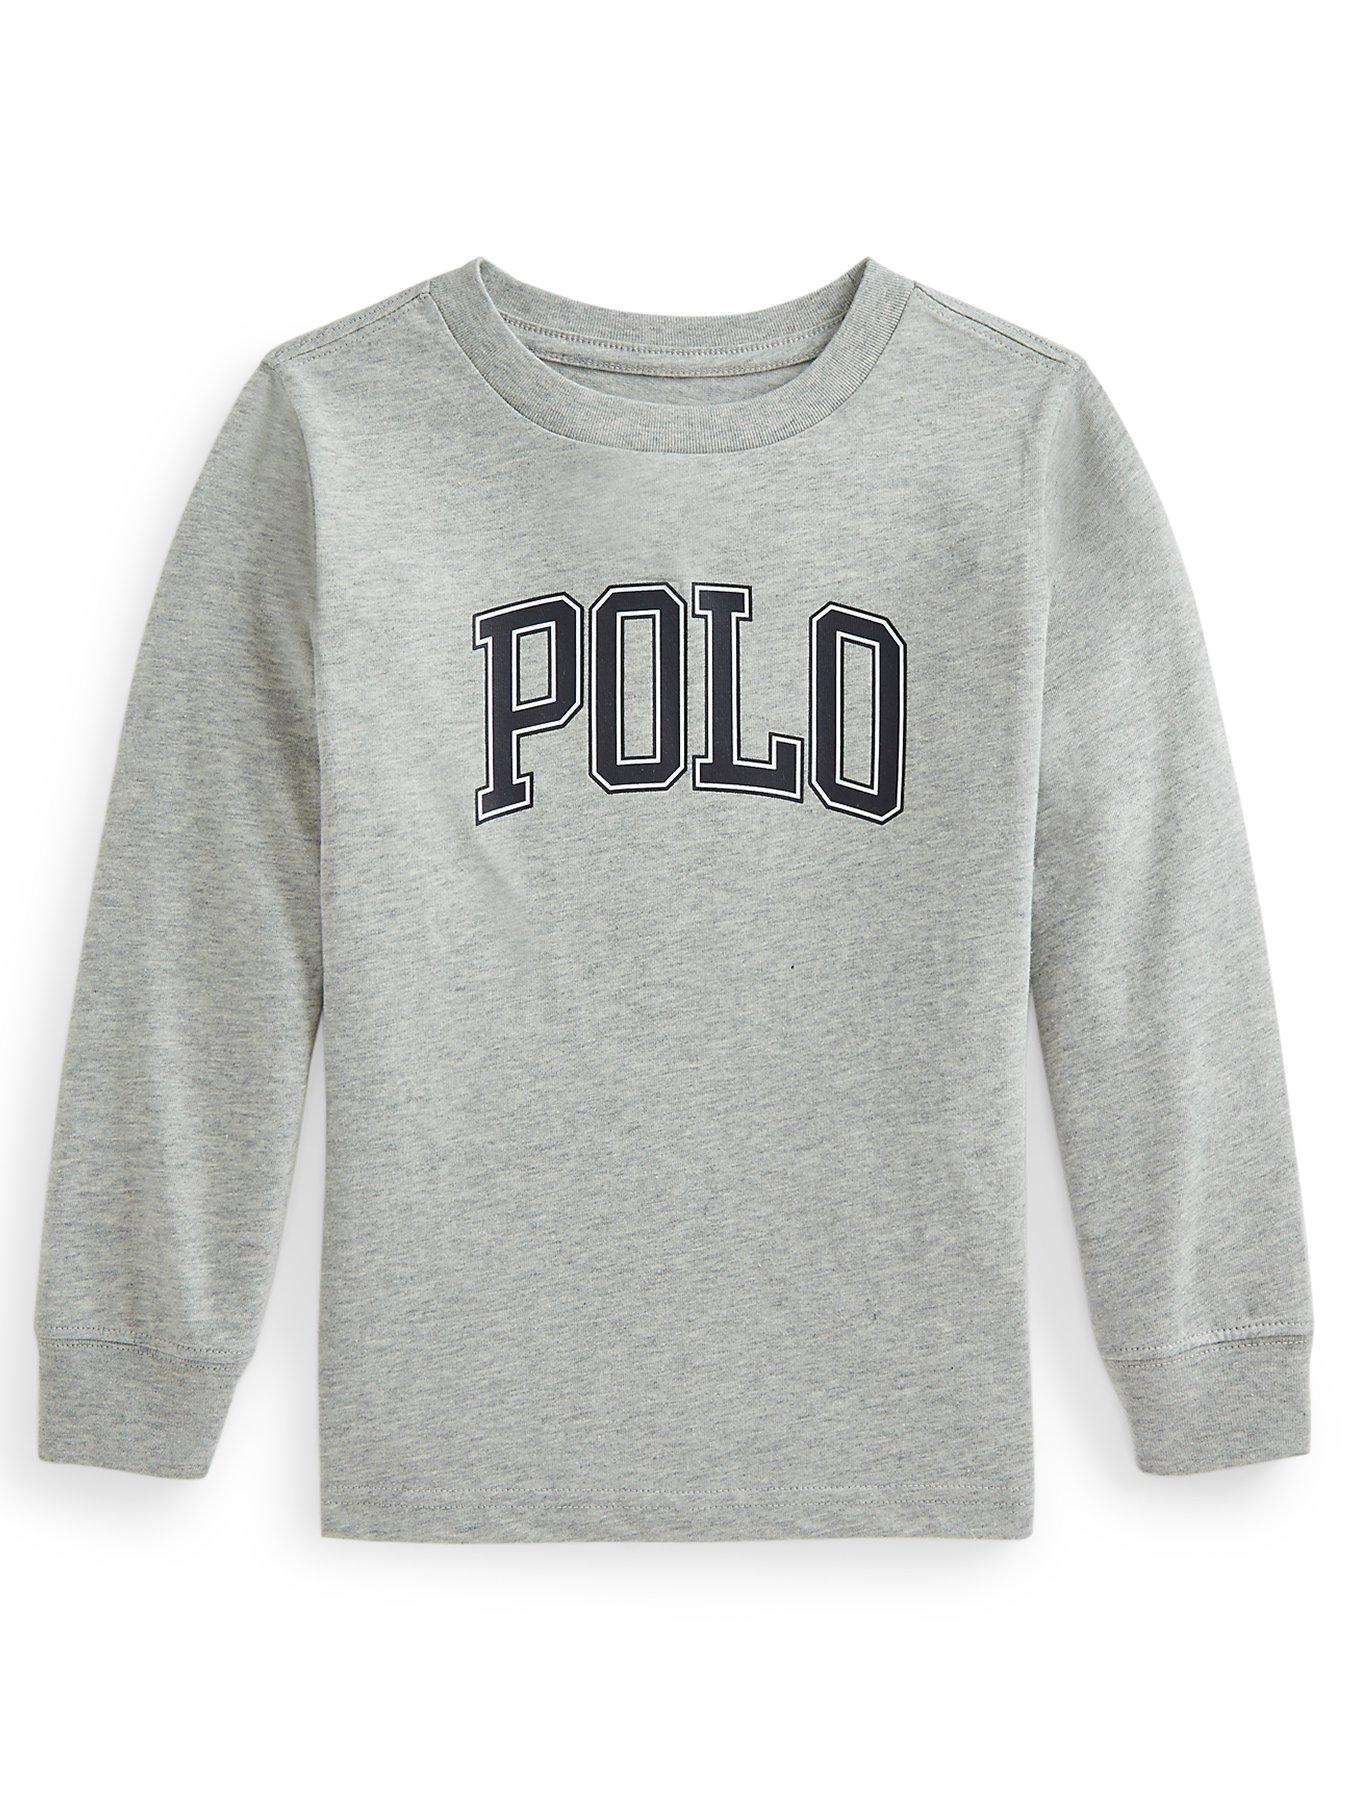 Ralph Lauren Boys Polo Logo Long Sleeve T-Shirt - Grey 